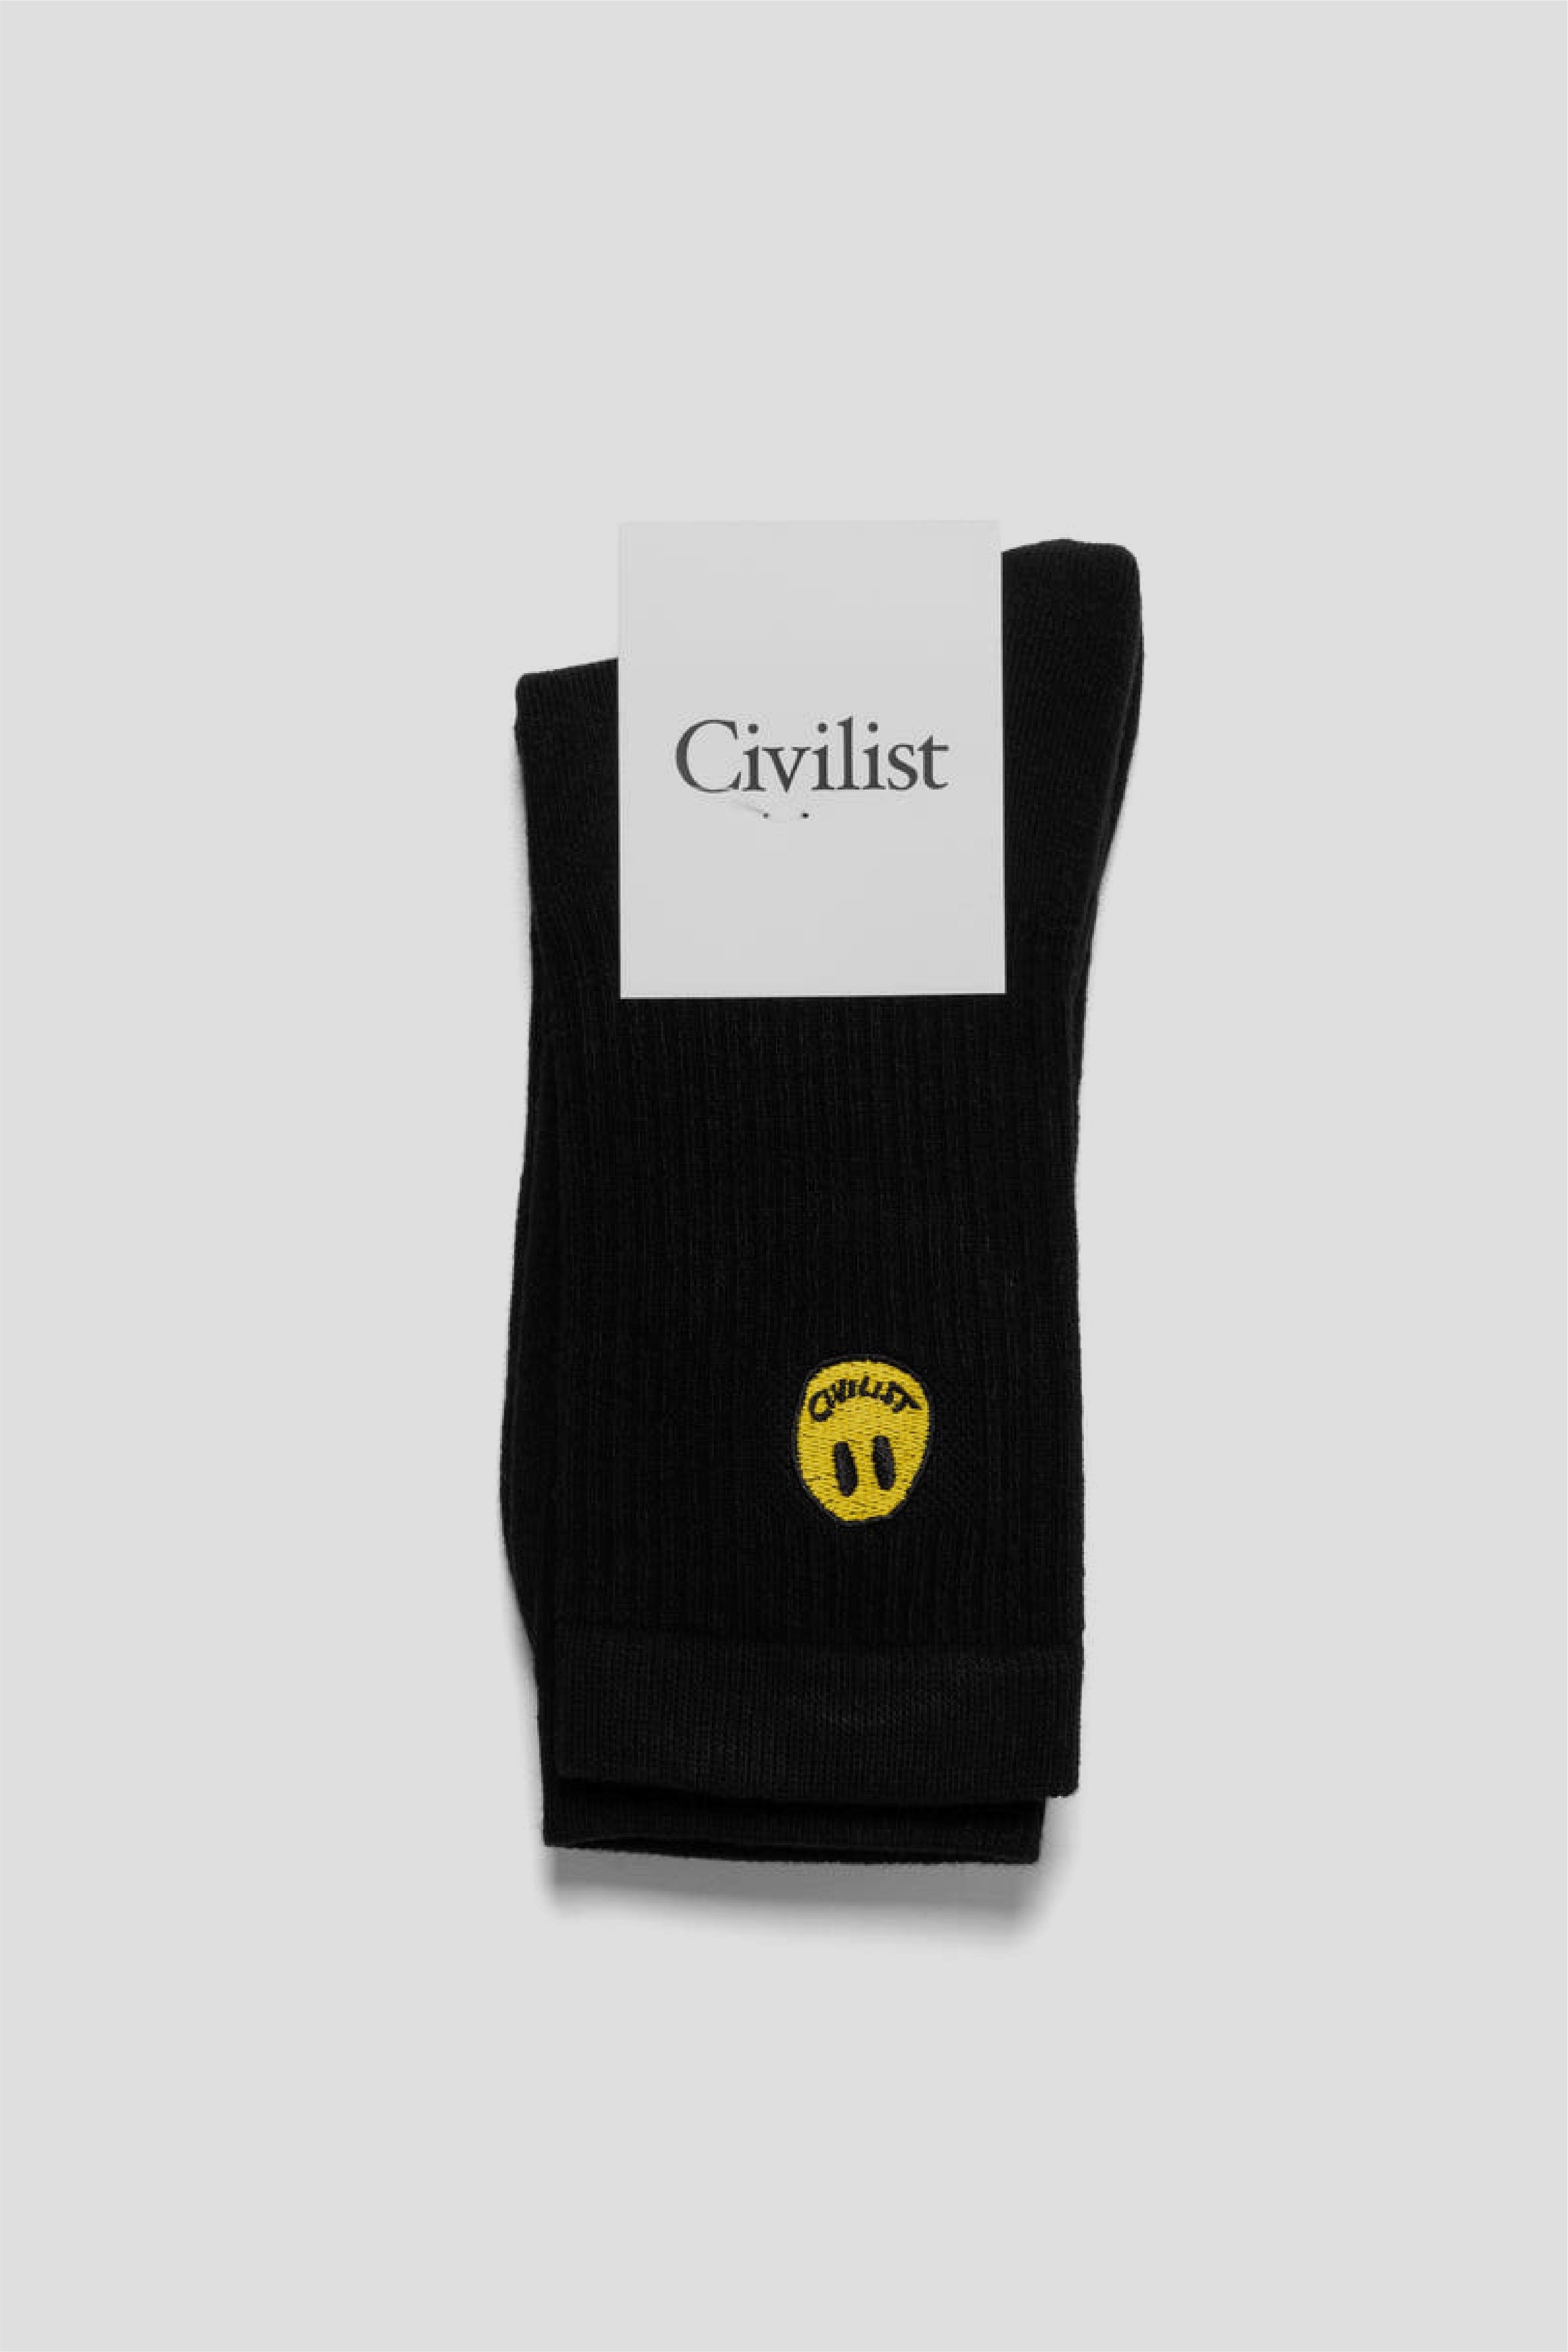 Selectshop FRAME - CIVILIST Mini Smiler Socks All-Accessories Dubai